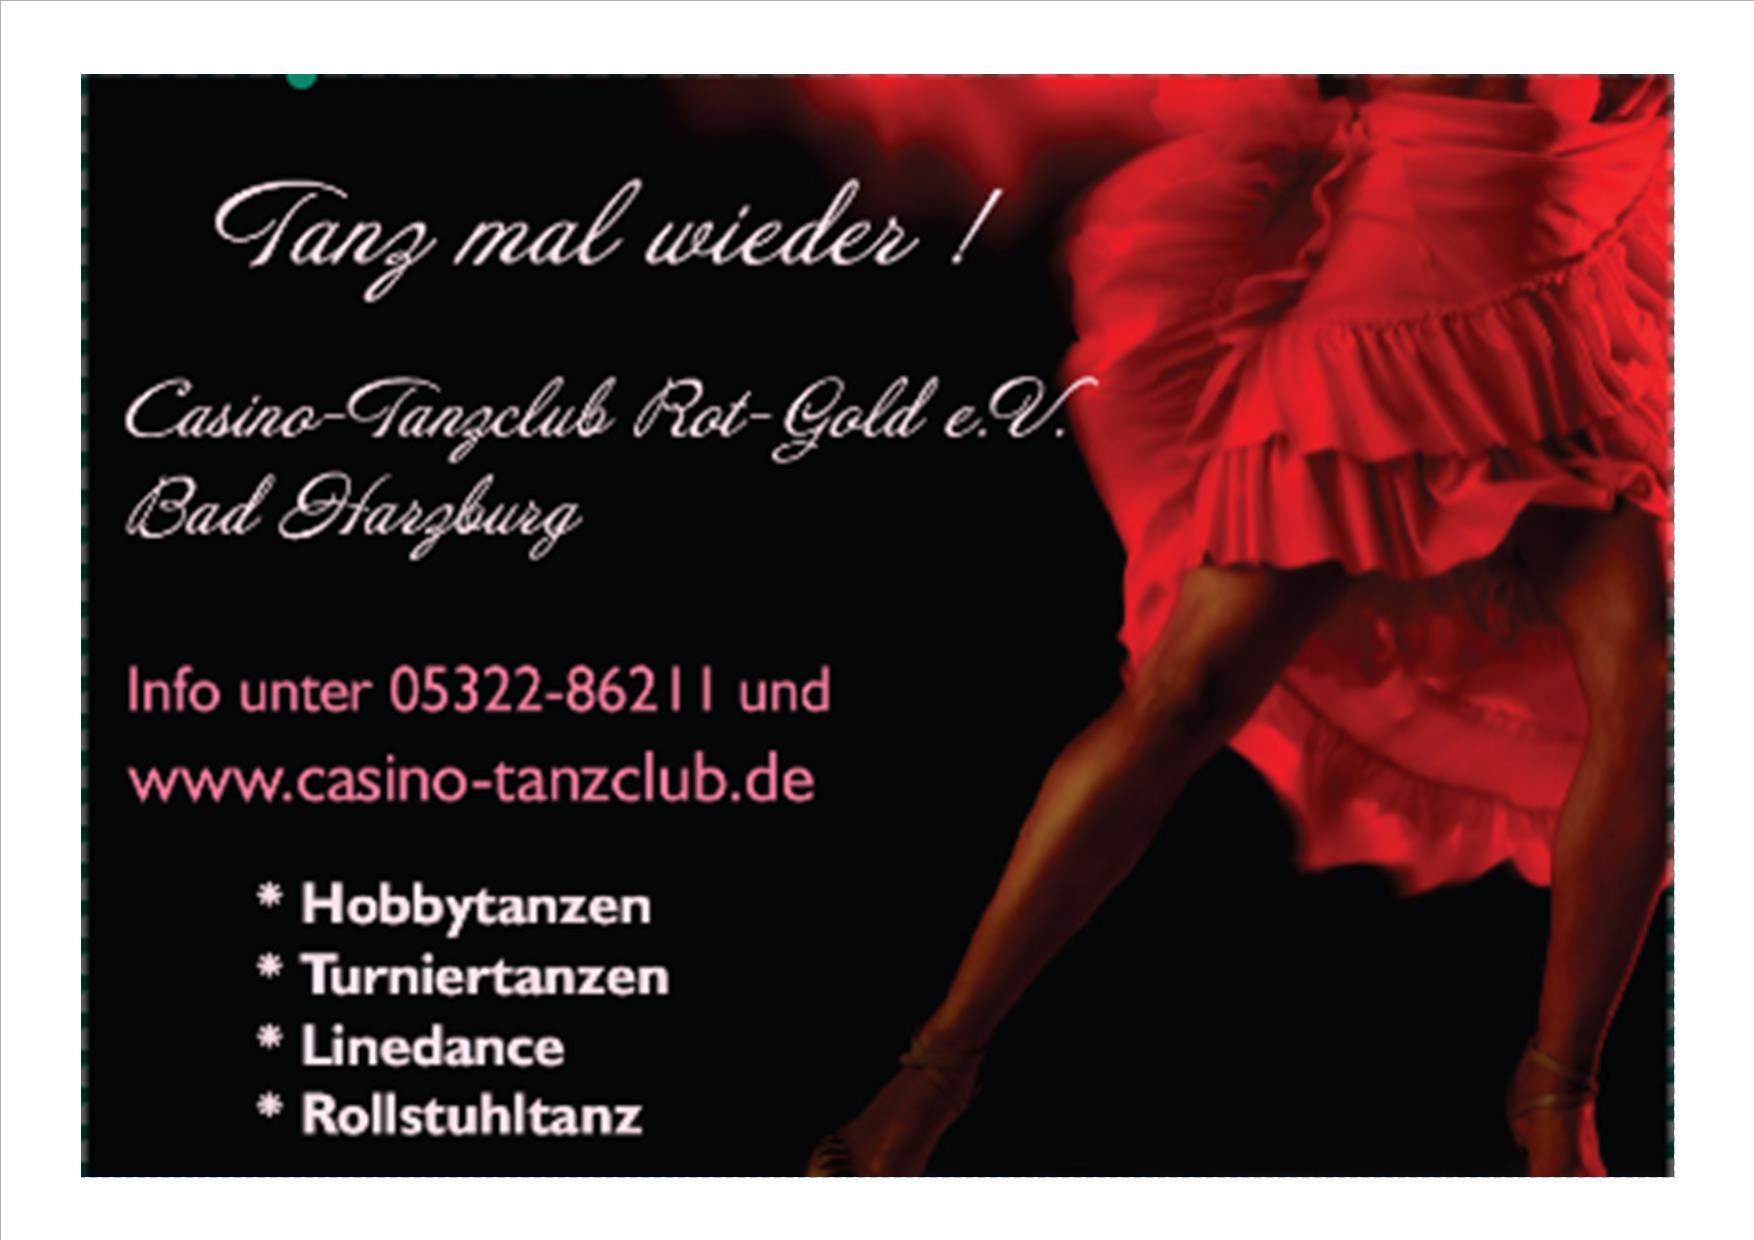 (c) Casino-tanzclub.de